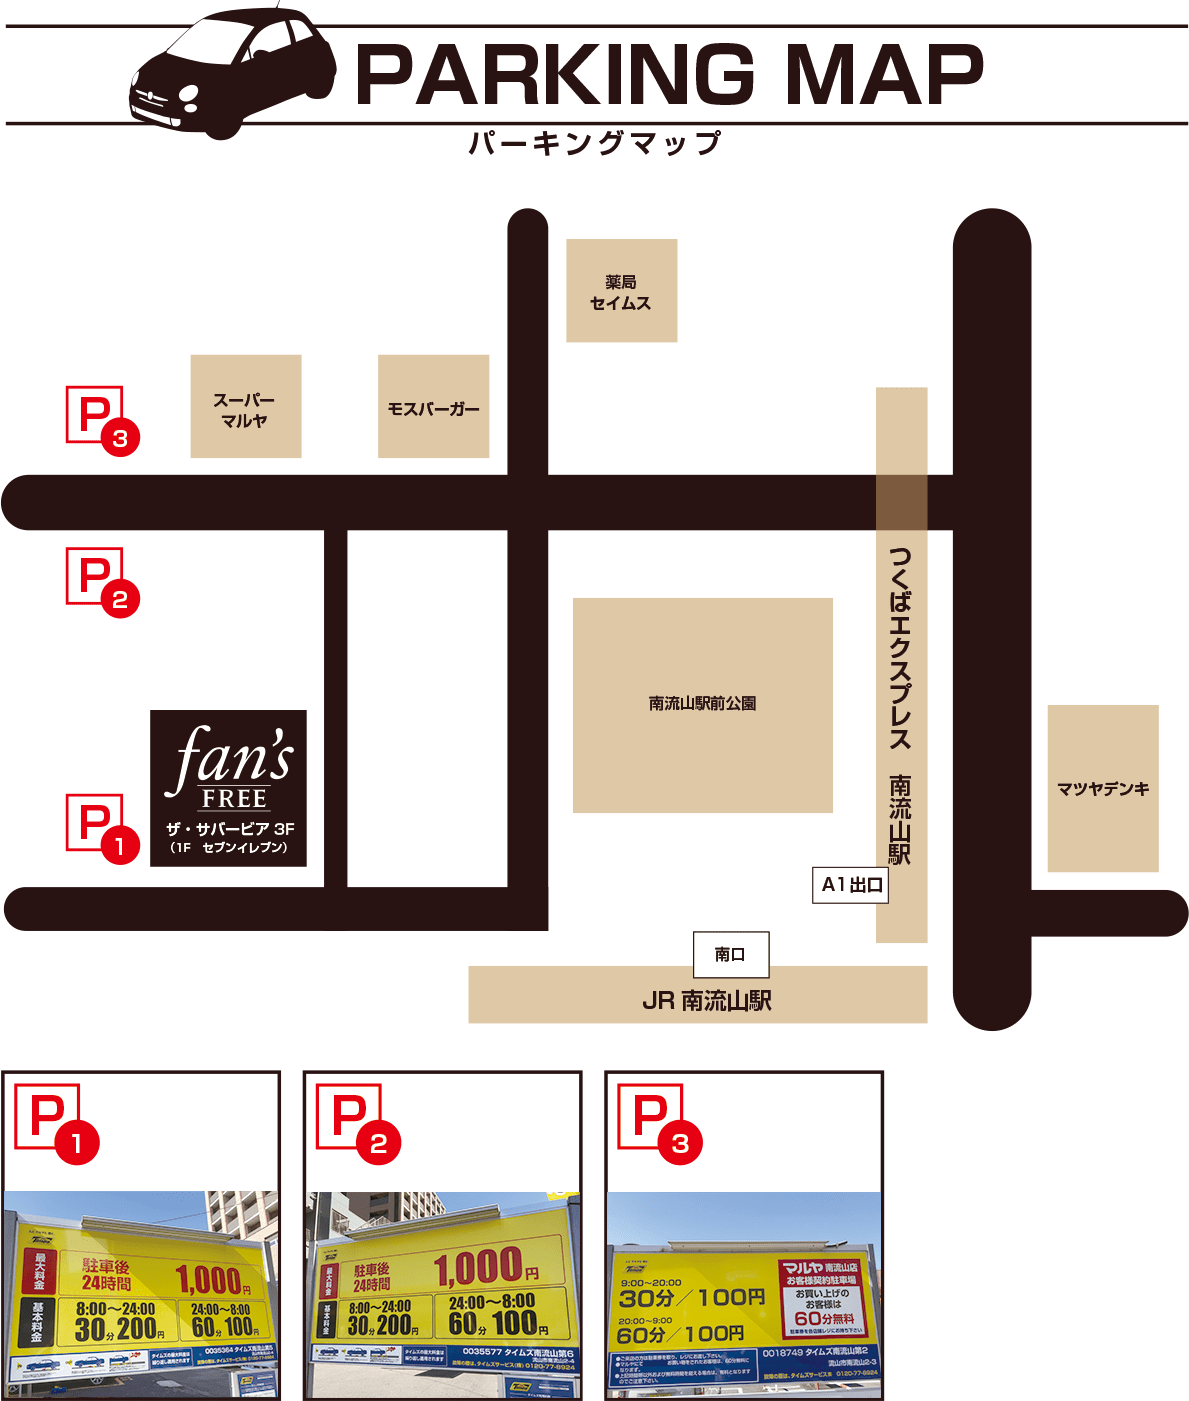 fan's FREE 南流山店パーキングマップ